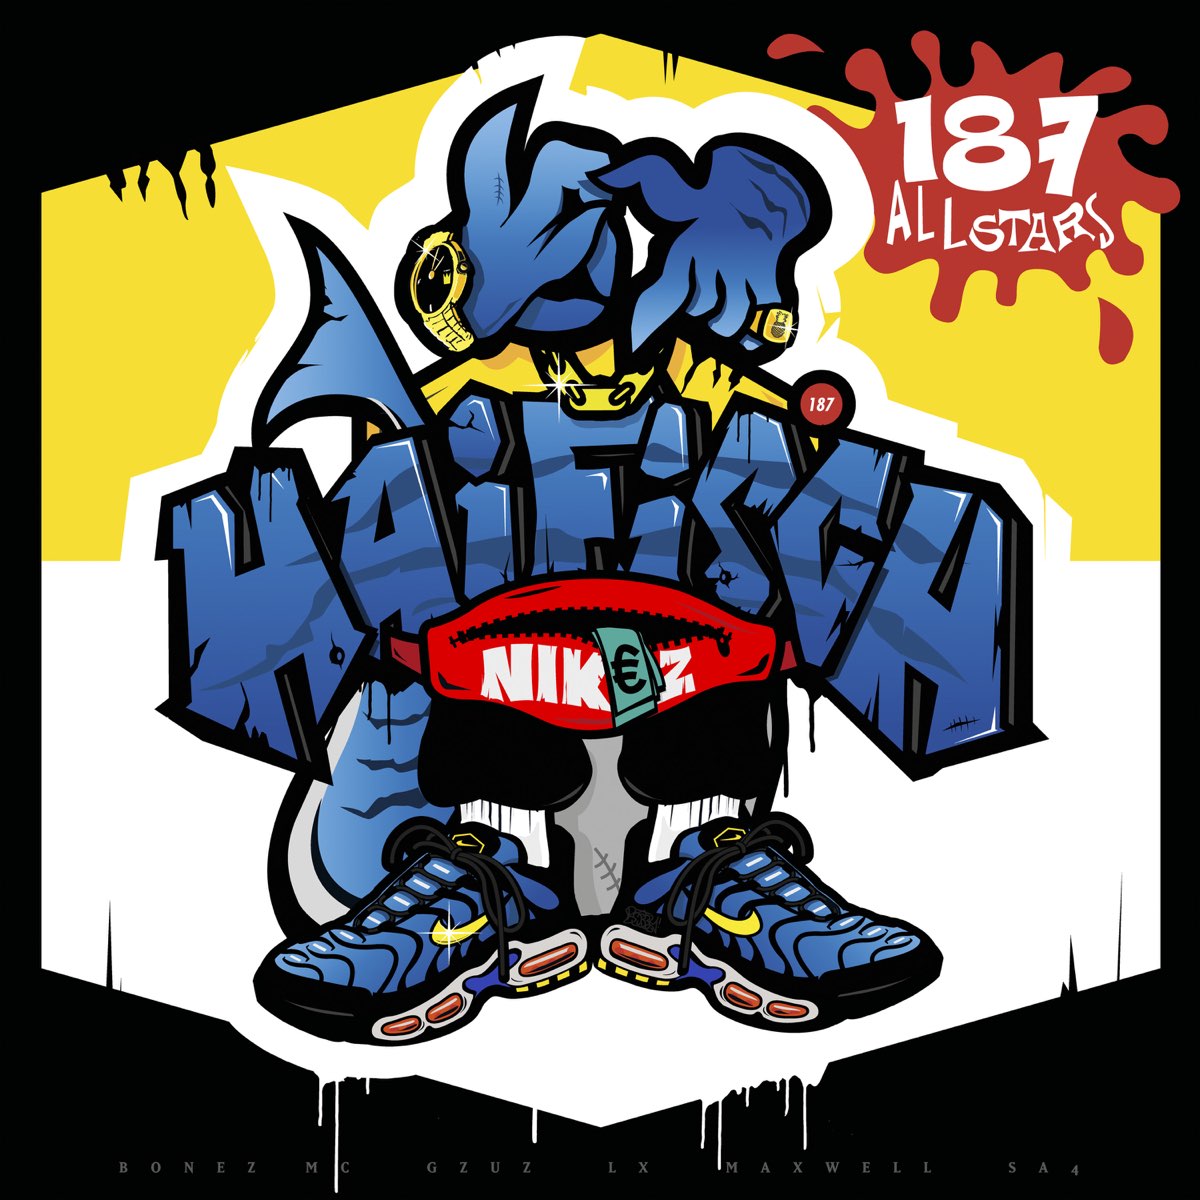 HaifischNikez Allstars (feat. Bonez MC, Gzuz & Sa4) - Single by LX &  Maxwell on Apple Music